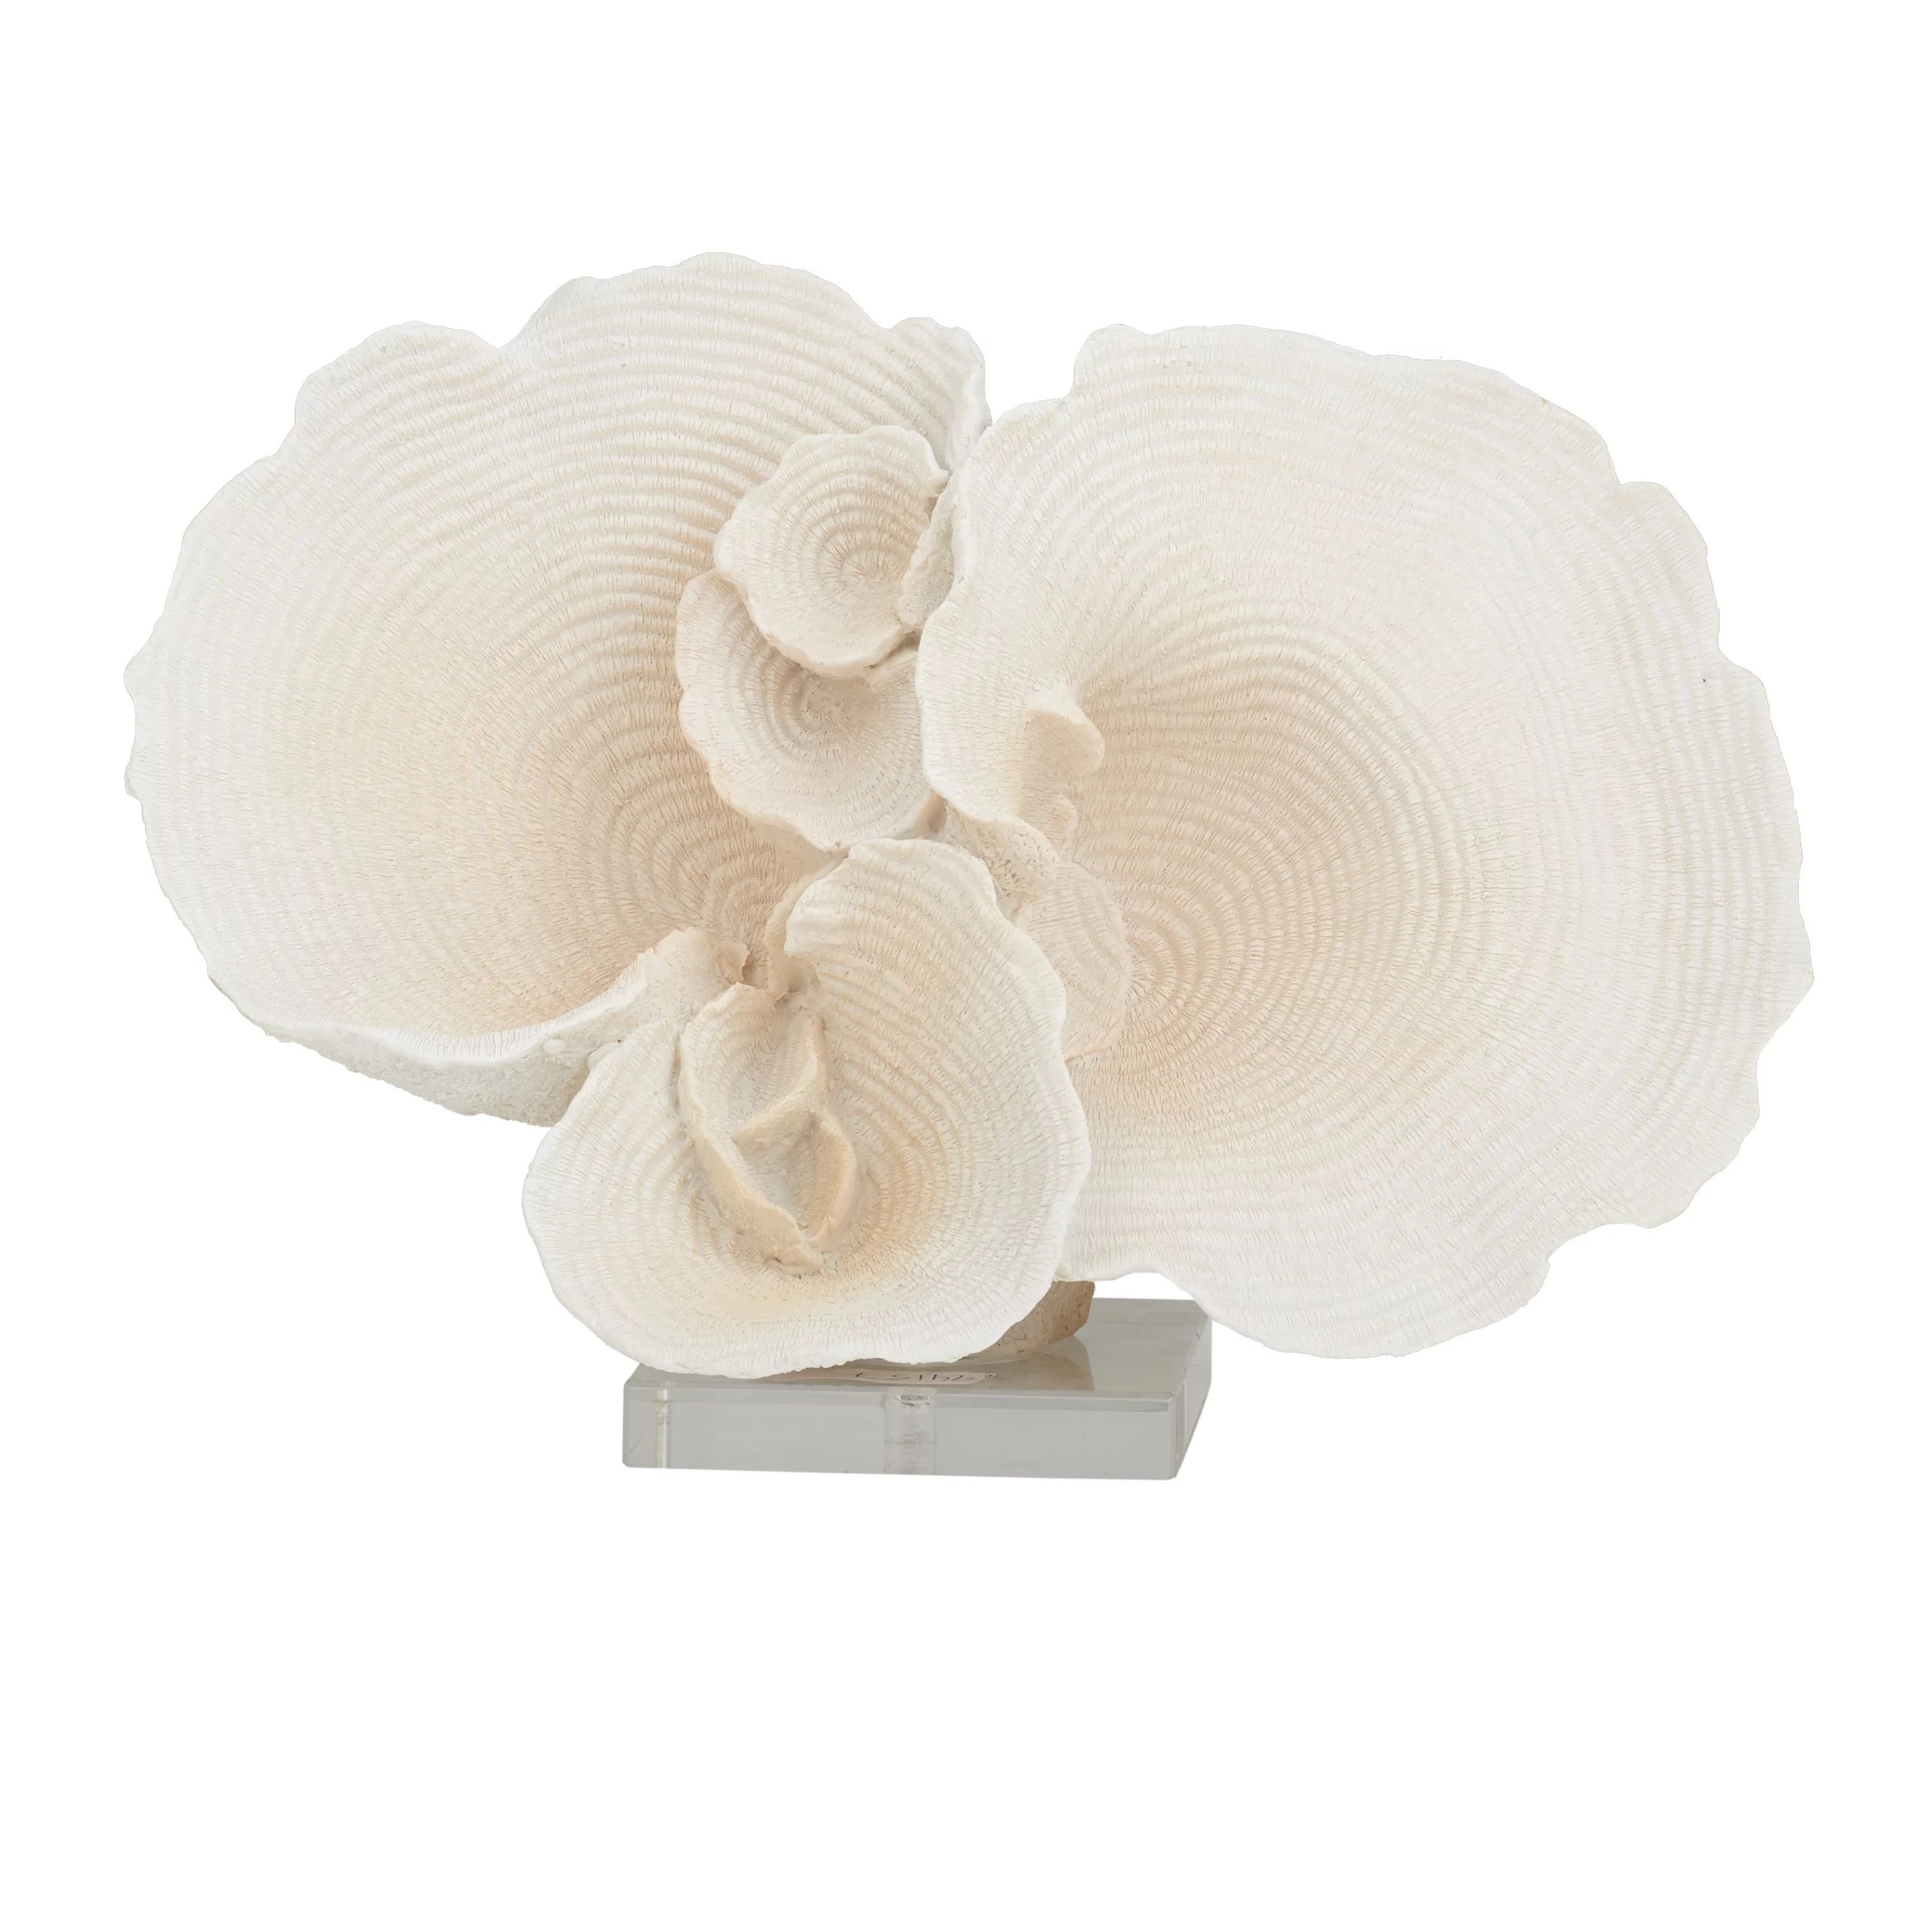 13" x 9" White Polystone Coral Sculpture, by DecMode | Walmart (US)